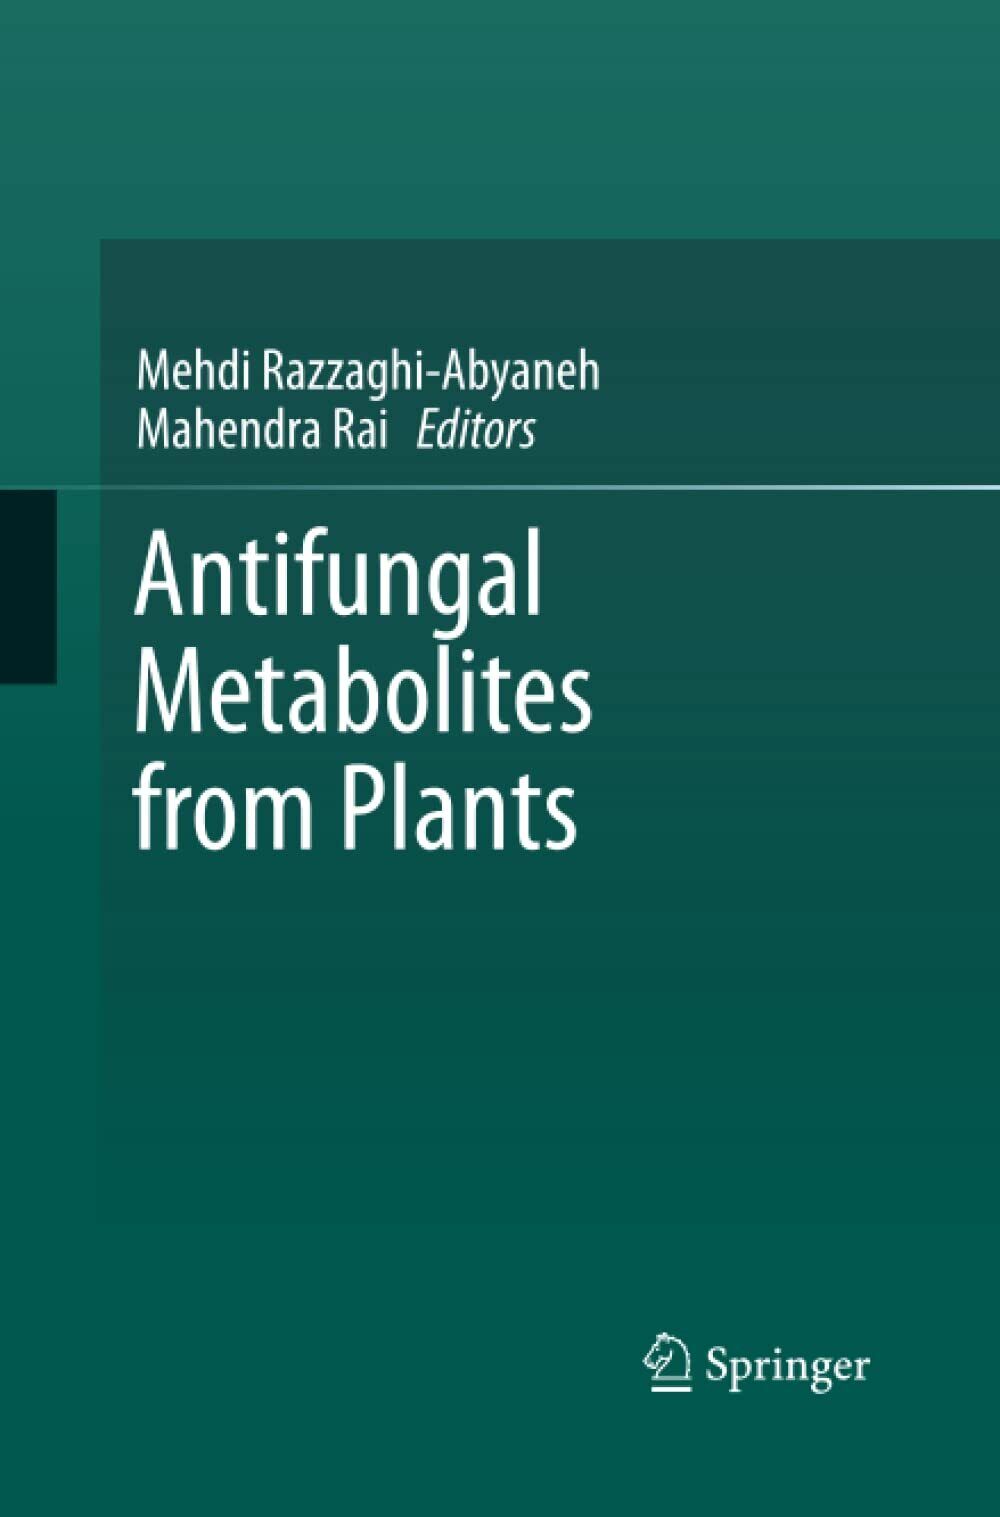 Antifungal Metabolites from Plants - Mehdi Razzaghi-Abyaneh - Springer, 2015